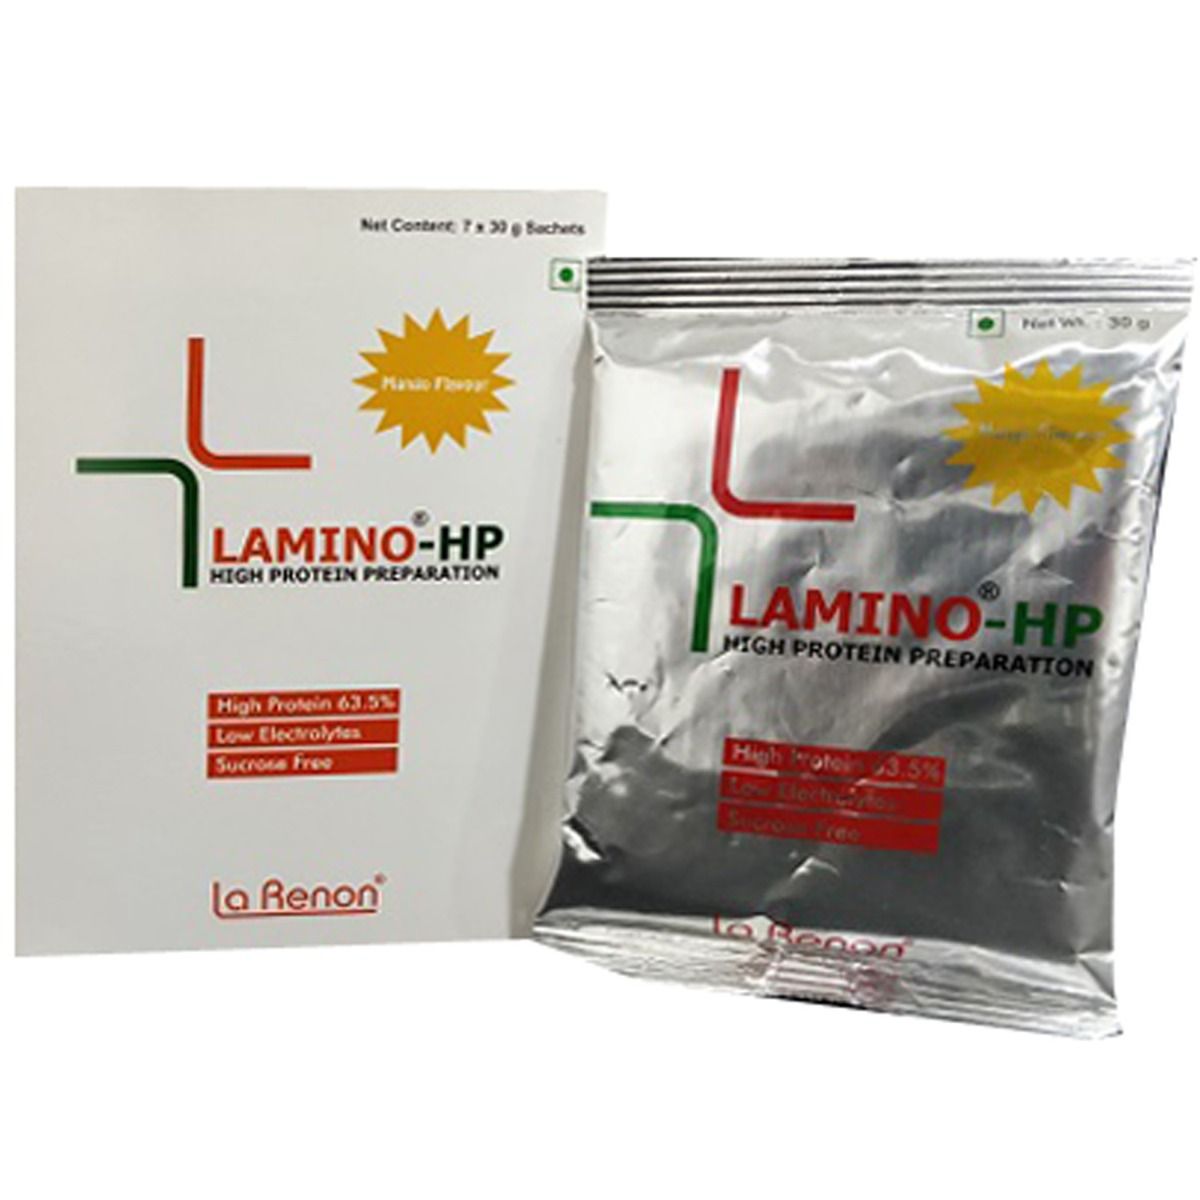 Buy Lamino-Hp, Mango 30 gm Online